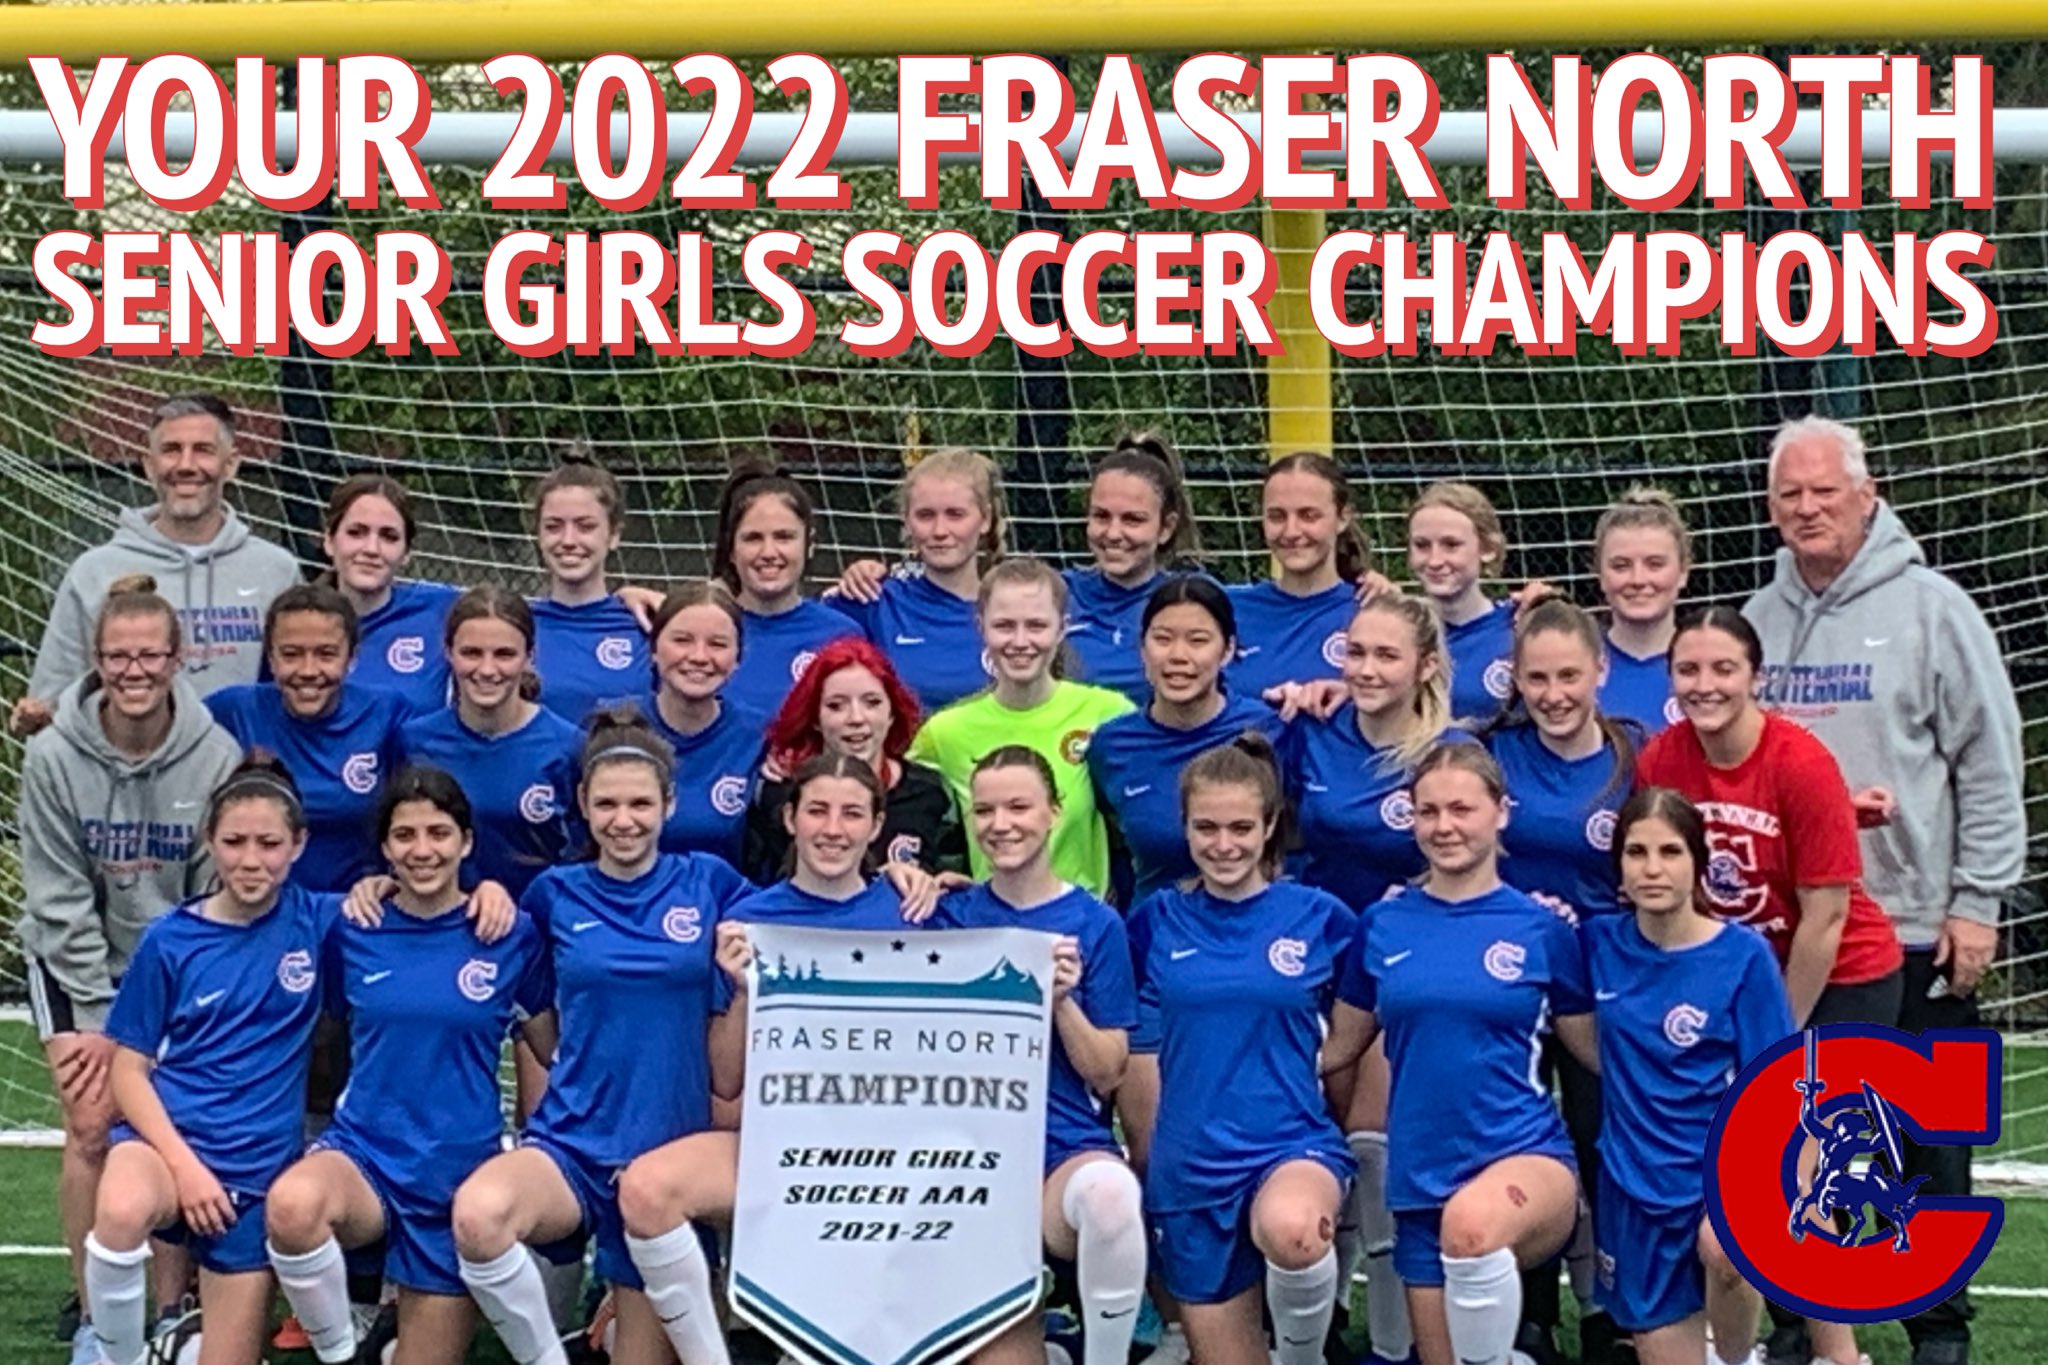 Fraser North Champs! Sr. Girls Soccer